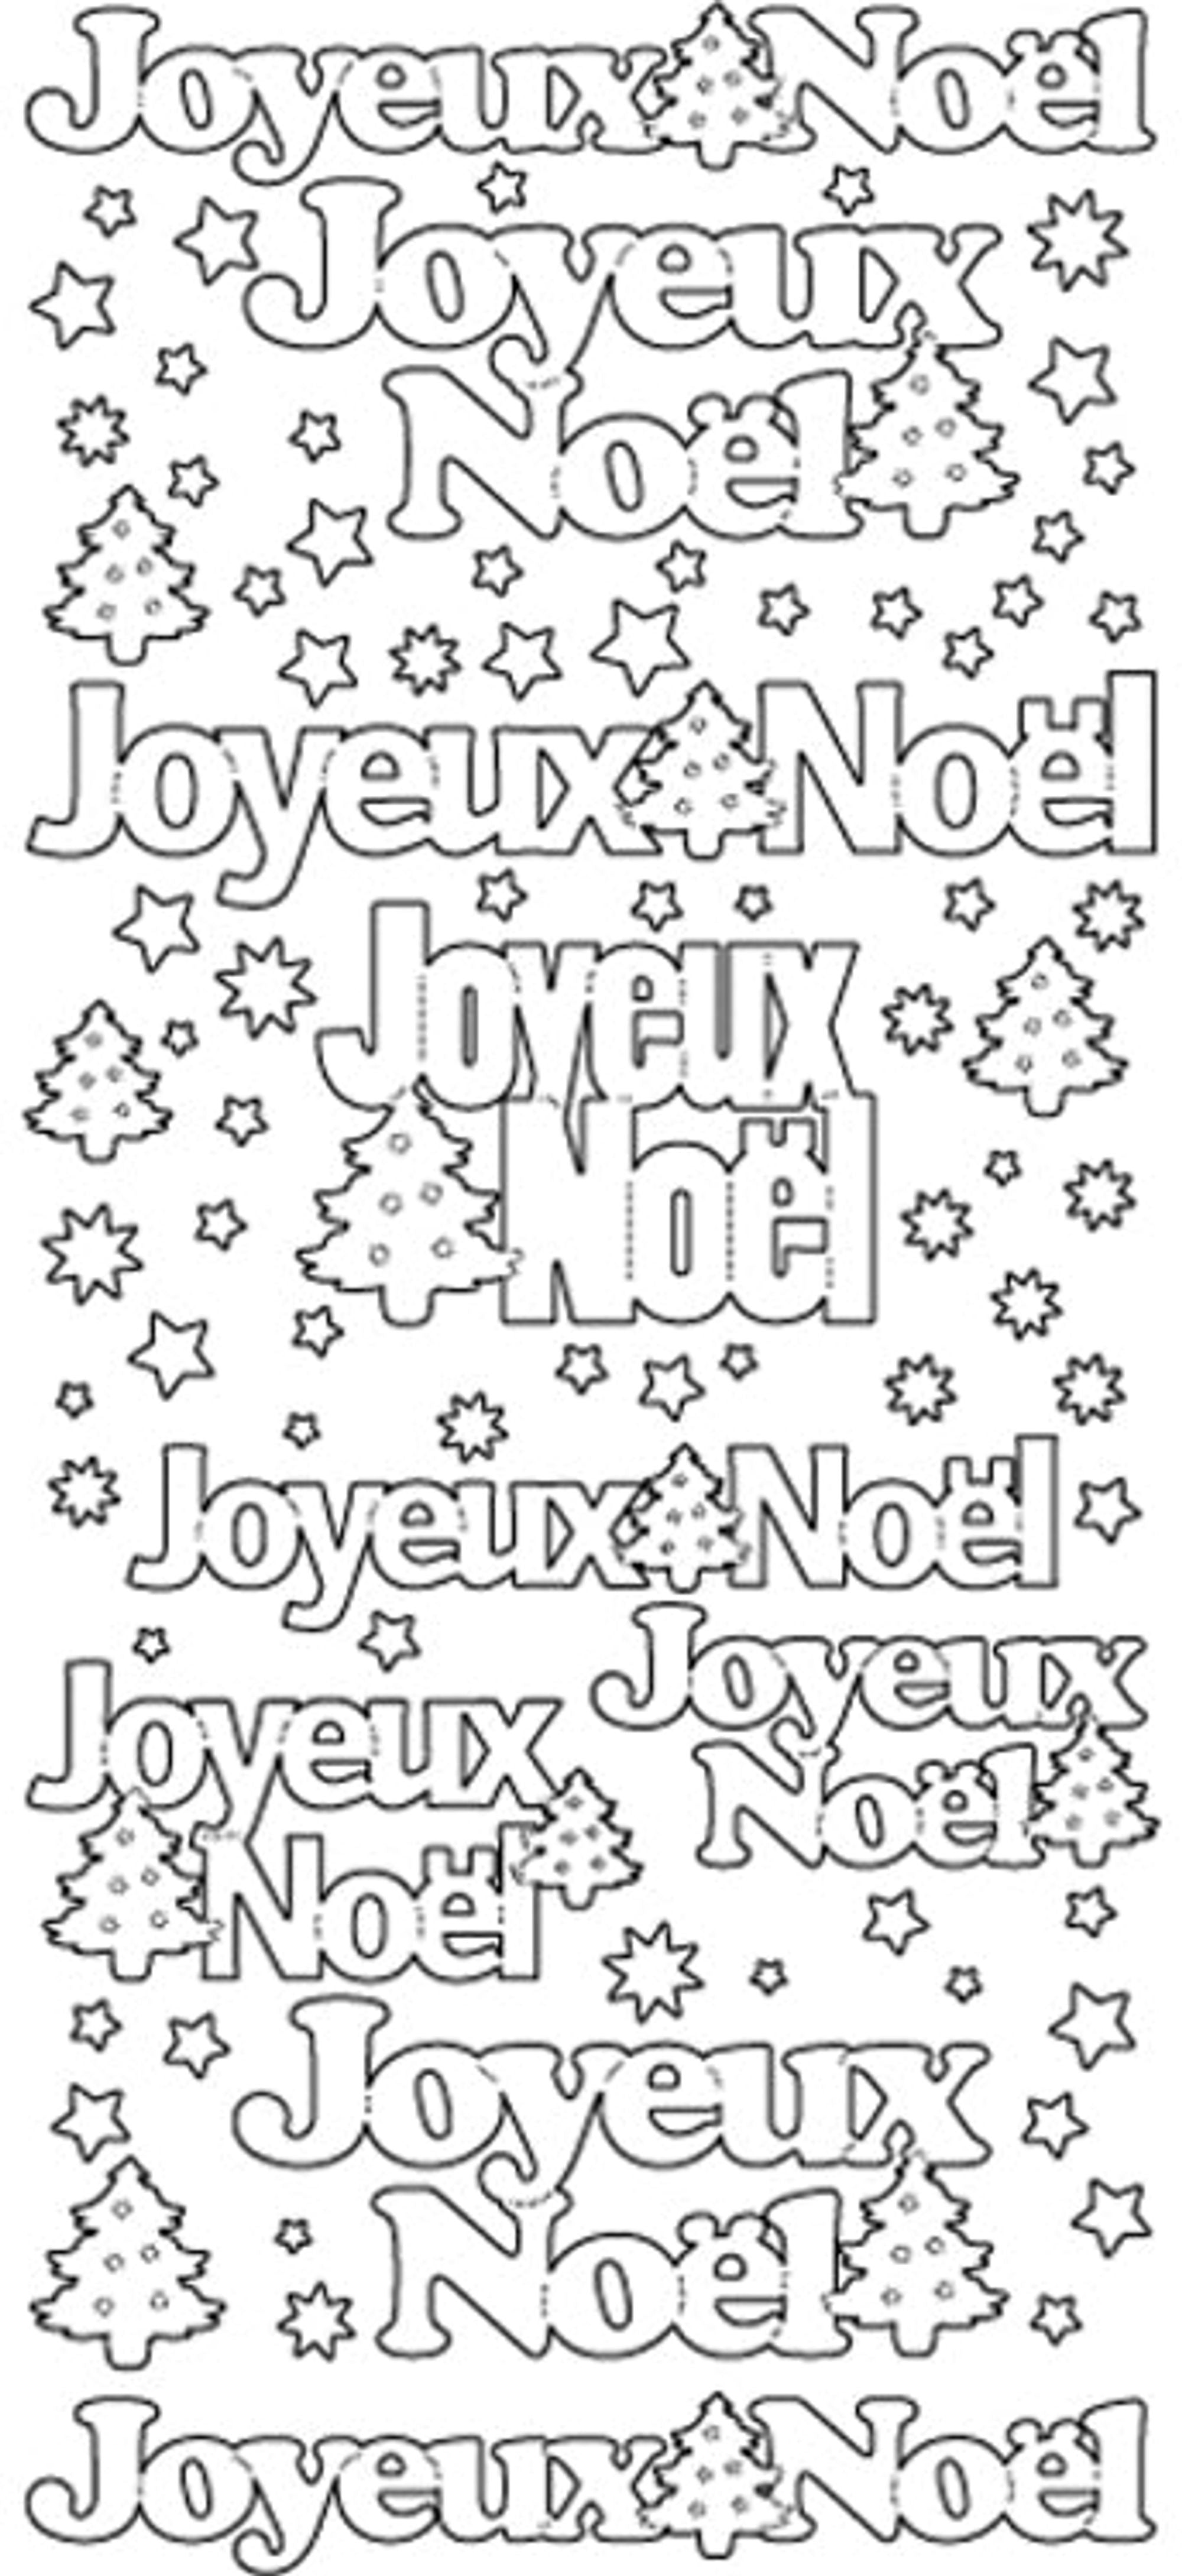 Peel-Off Stickers - Joyeux Noel